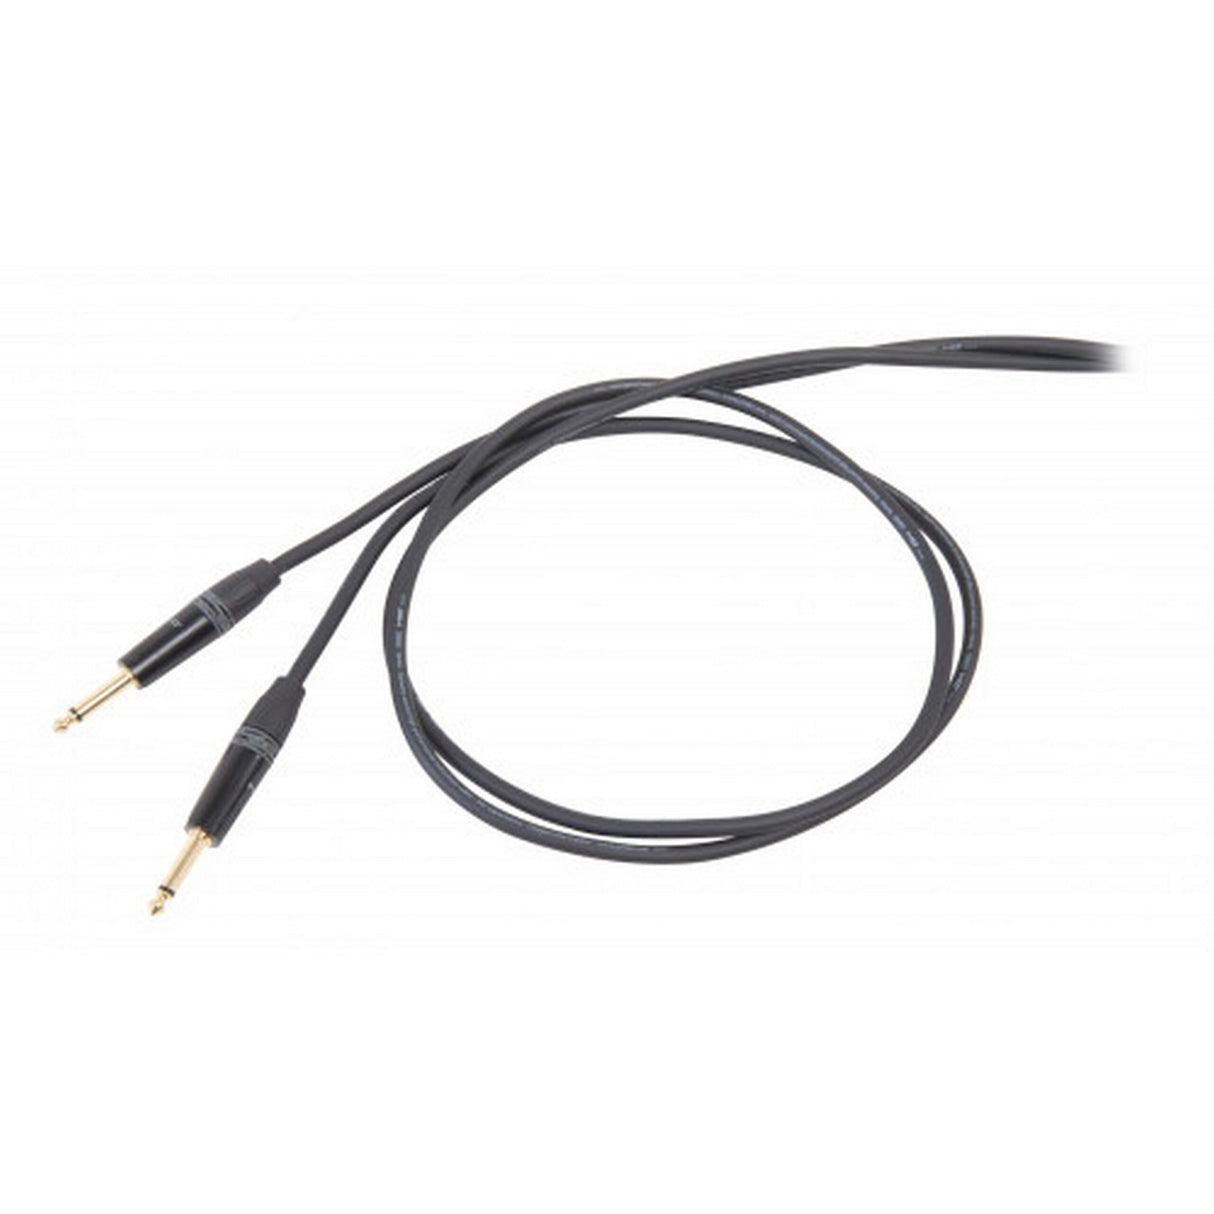 DieHard DHS100LU3 ONEHERO Professional Instrument Cable, 3 m